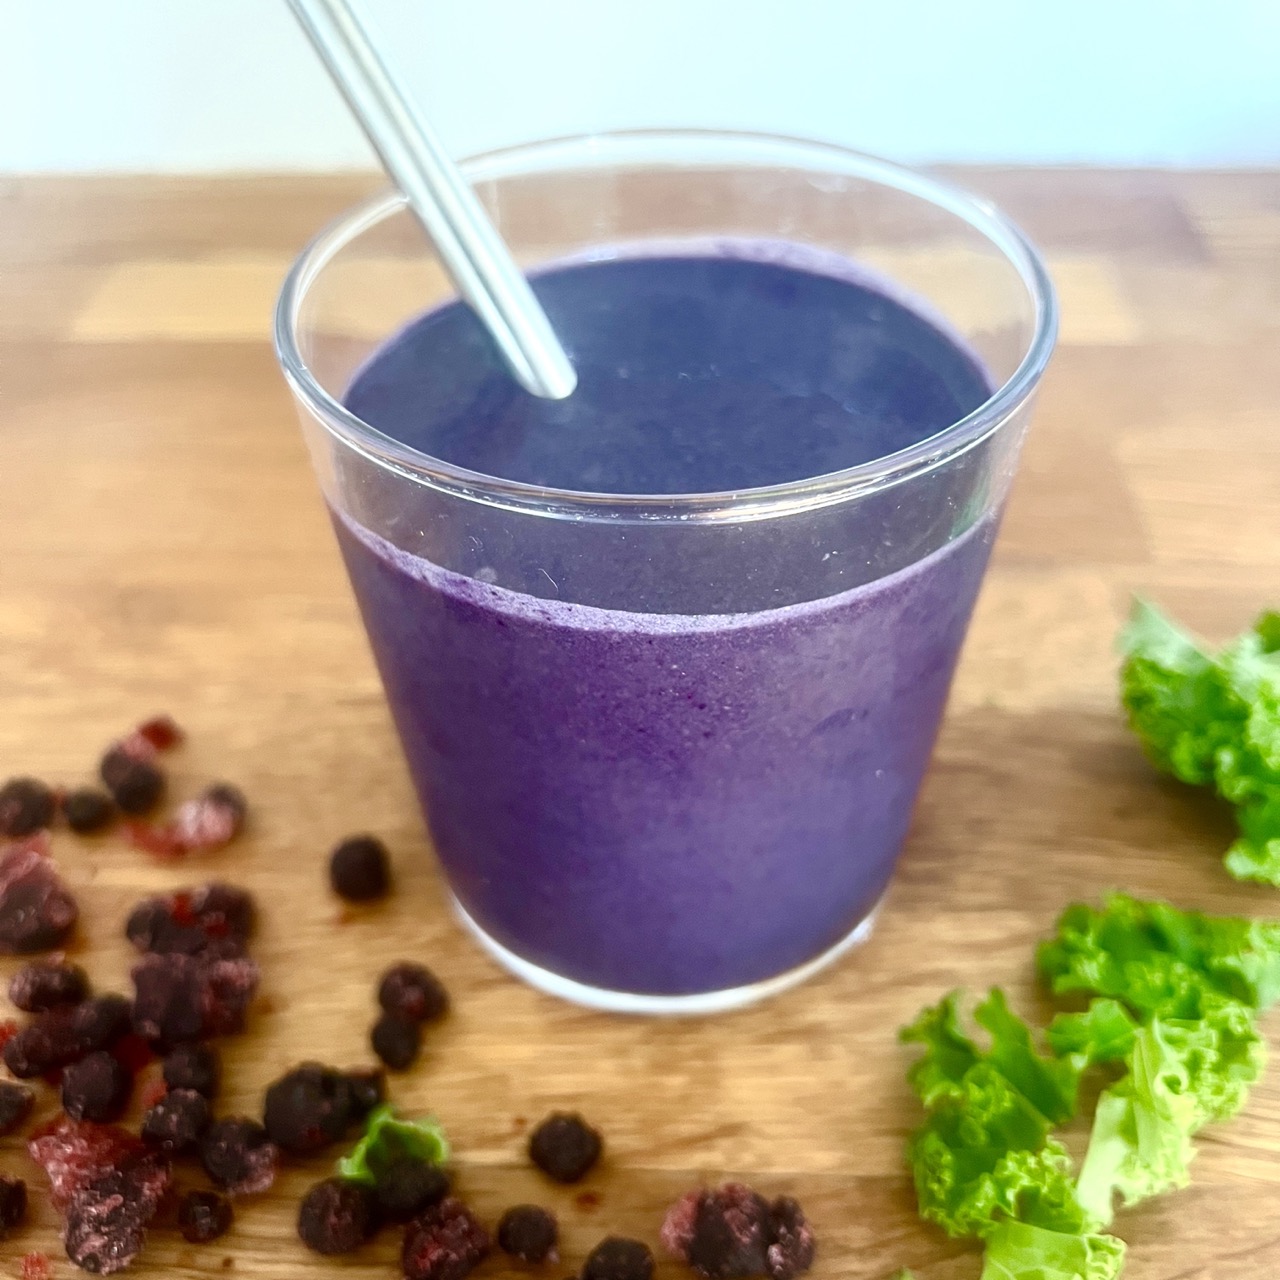 Blueberry Green Smoothie bursting with antioxidants